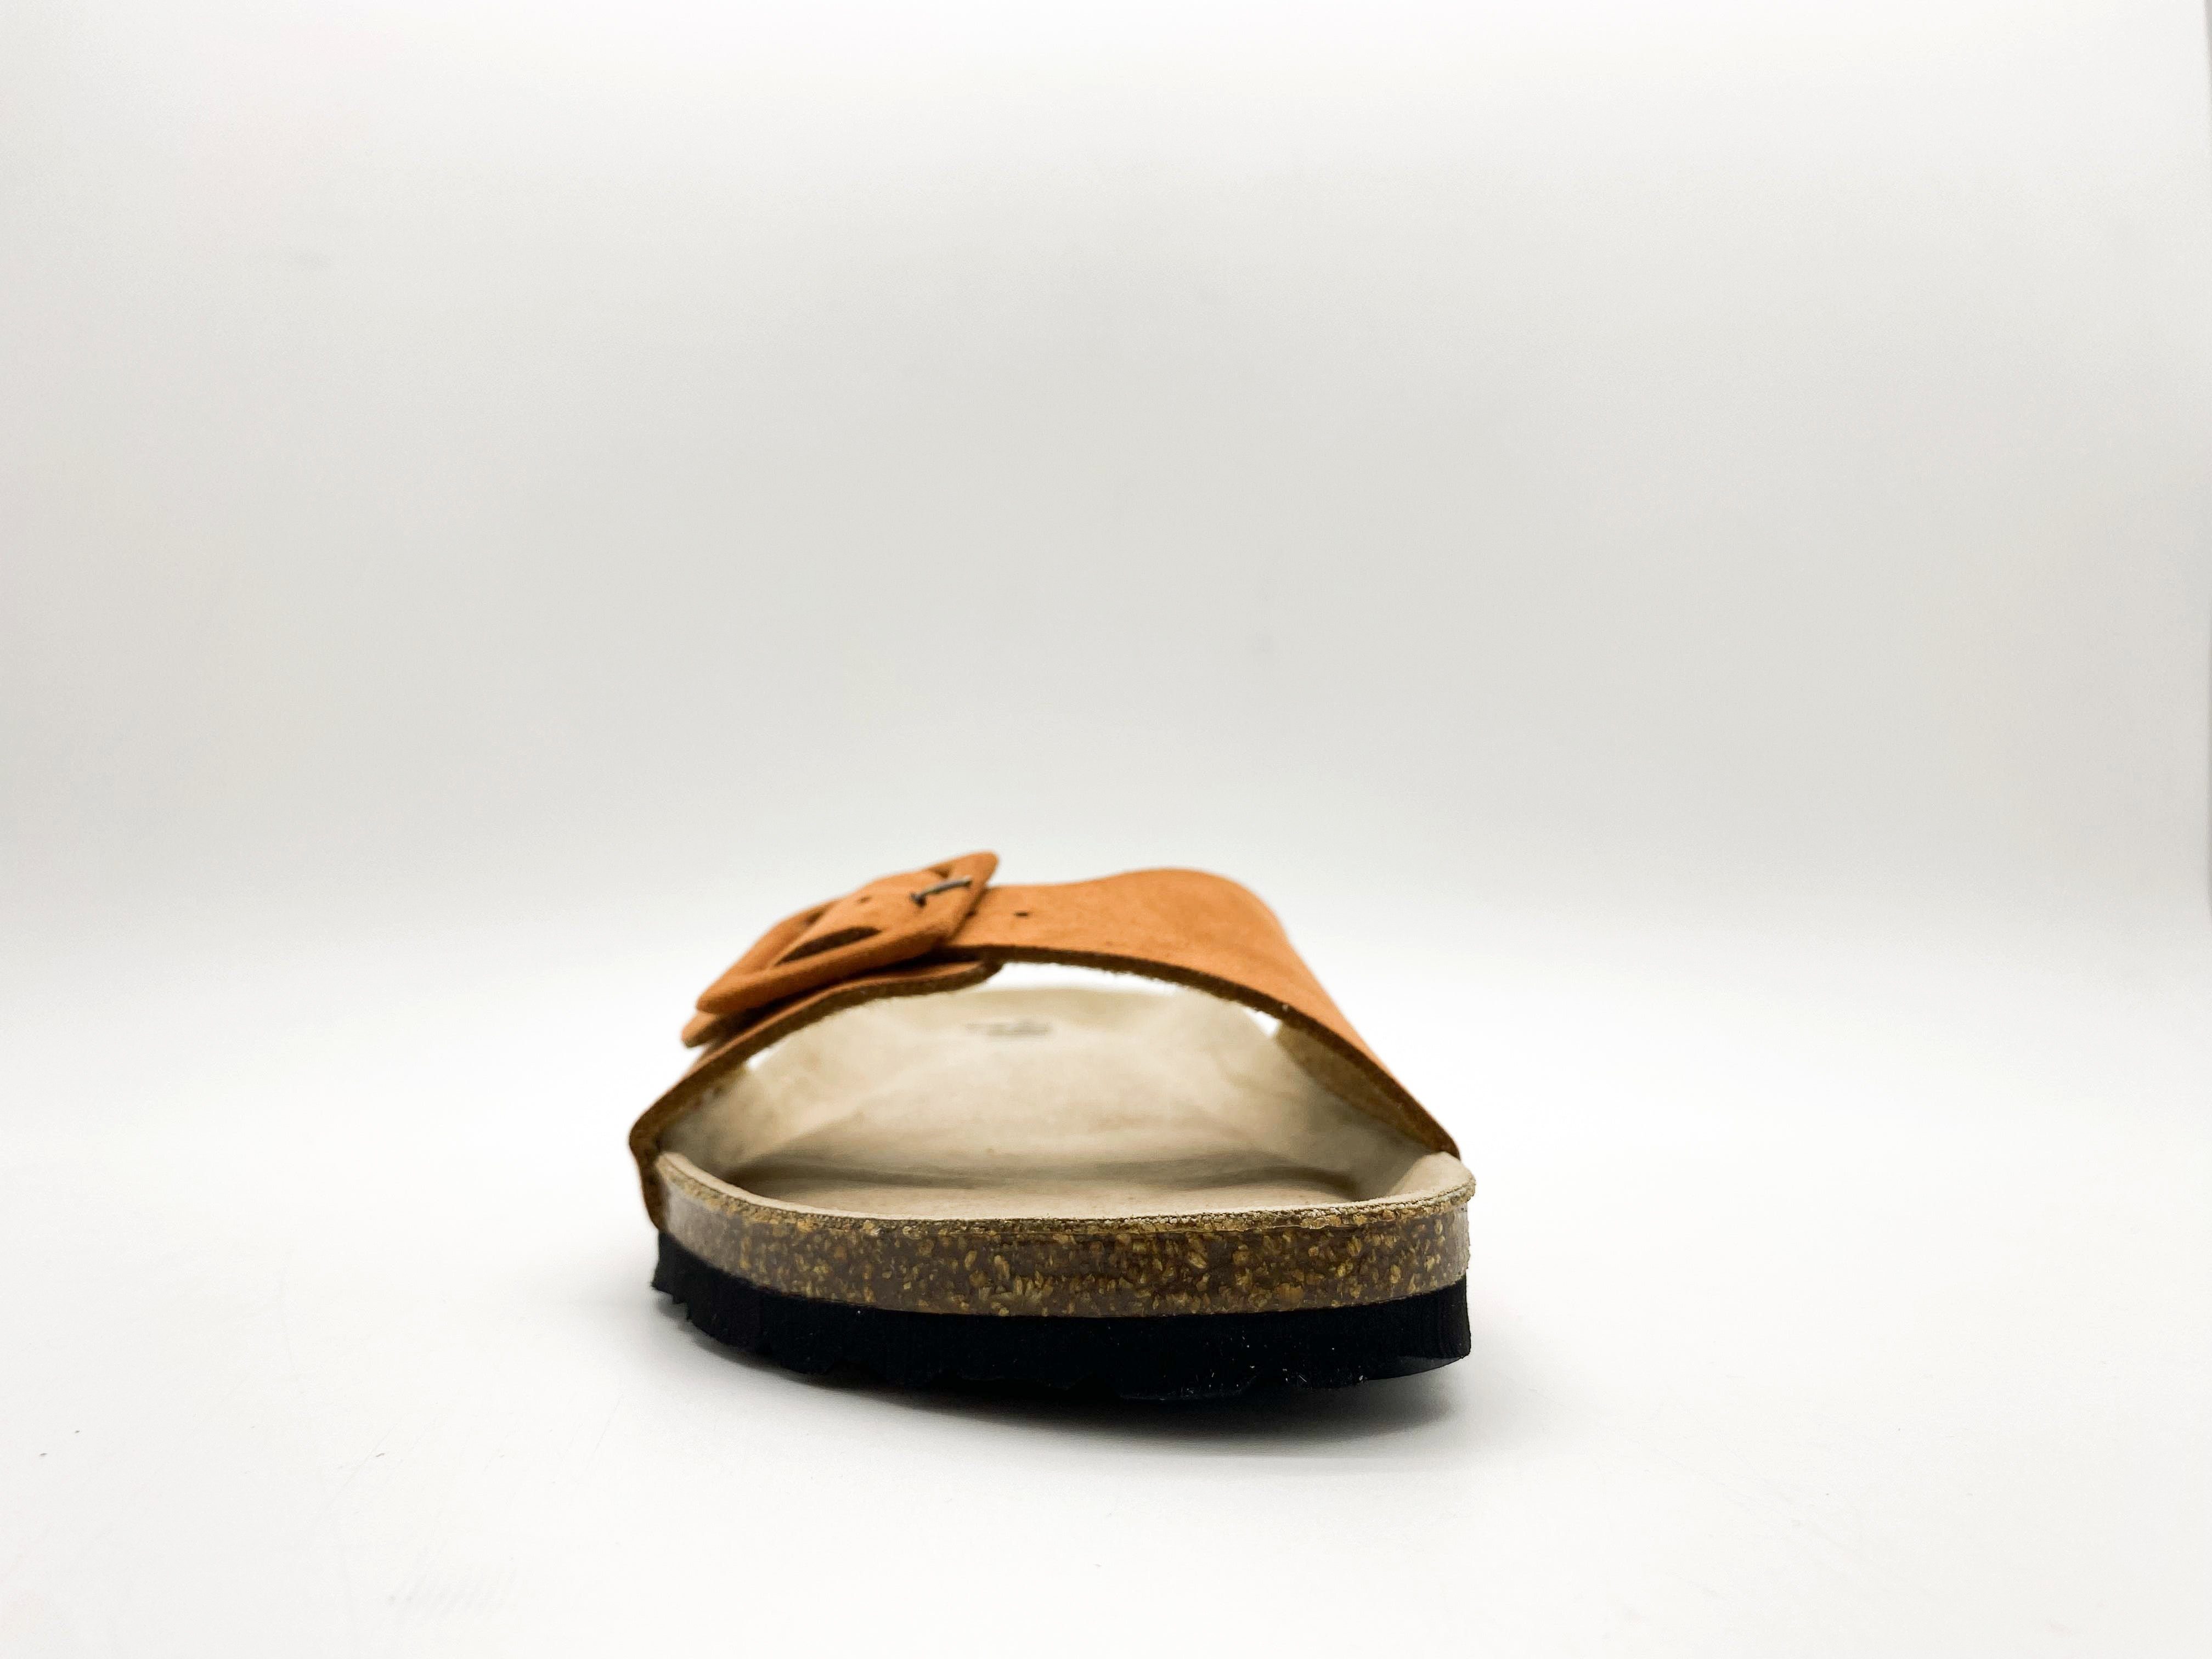 Eco Bio Strap ® Covered thies Sandale Sandal Orange Vegan 1856